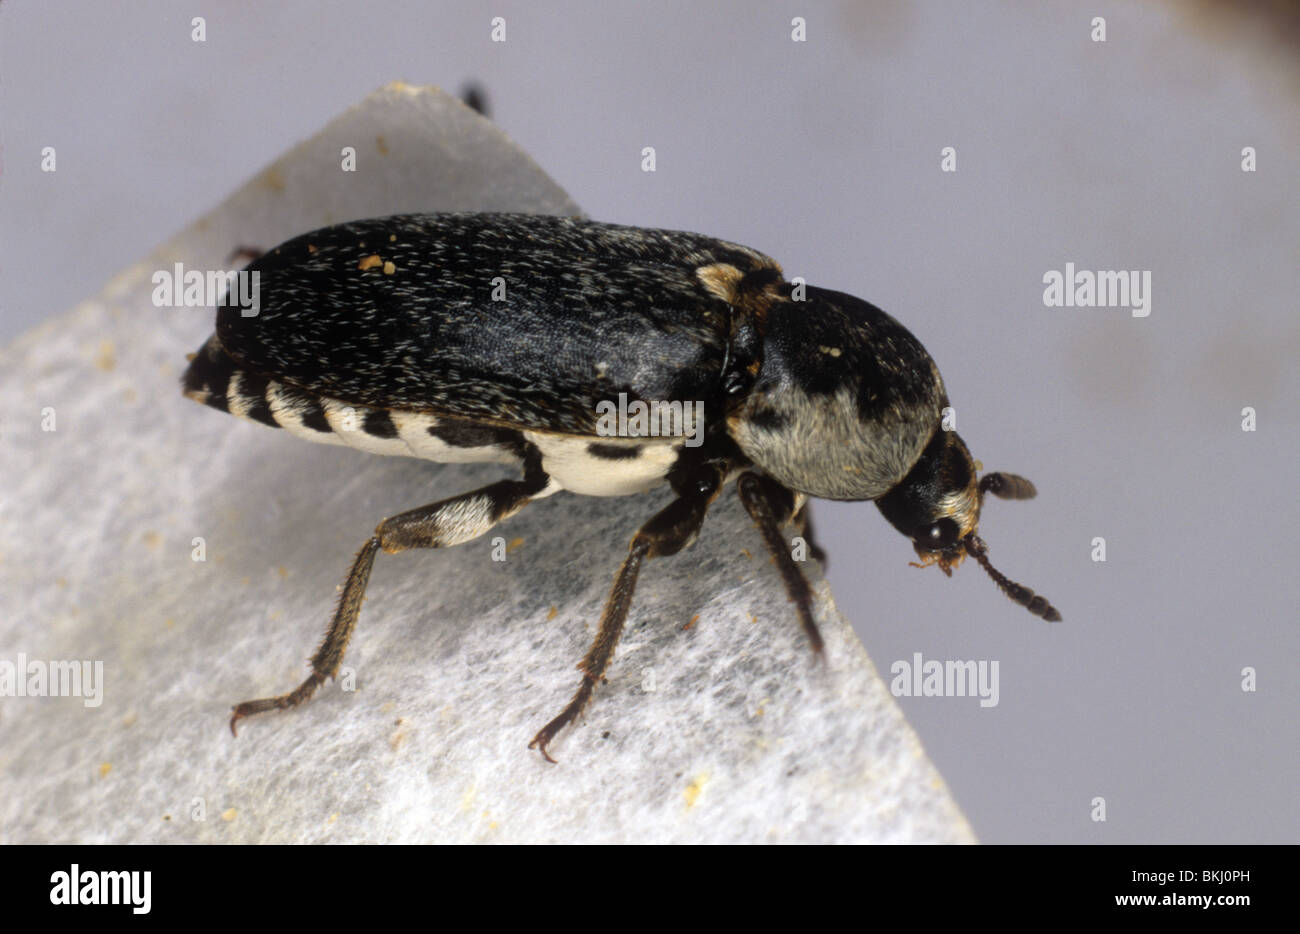 Hide beetle (Dermestes frischi) adult pest Stock Photo